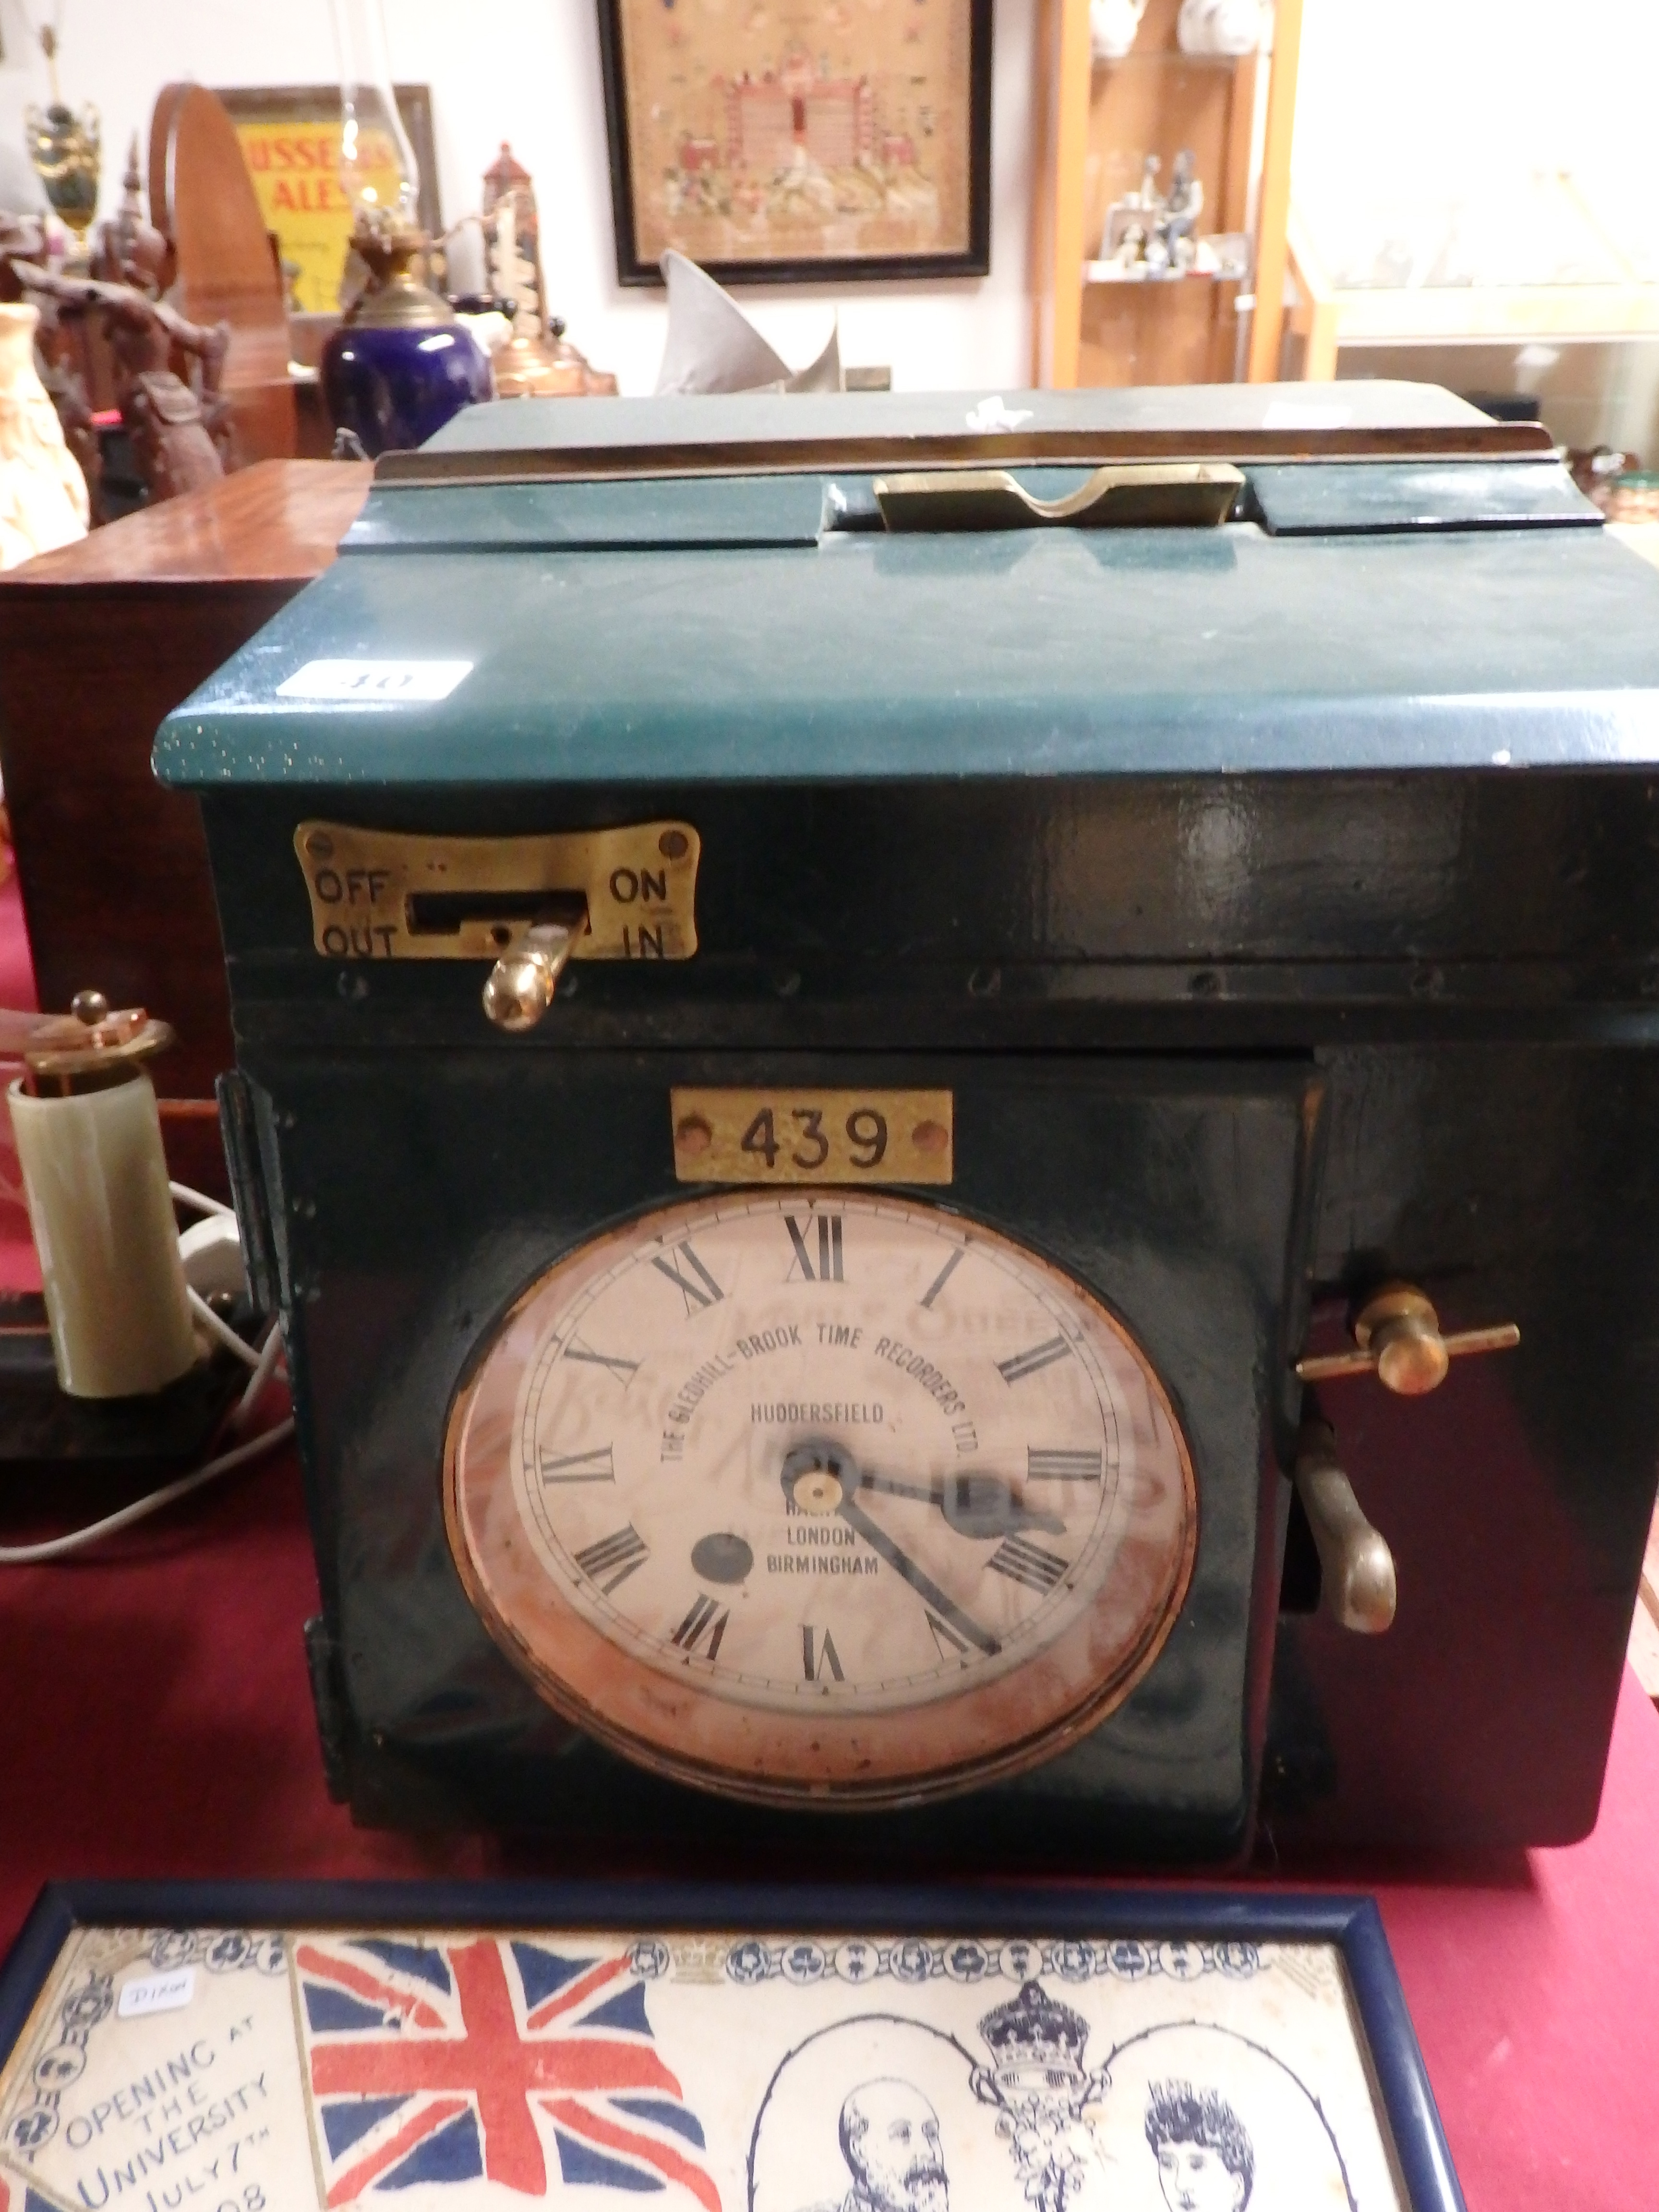 The Gledhill brook time clock